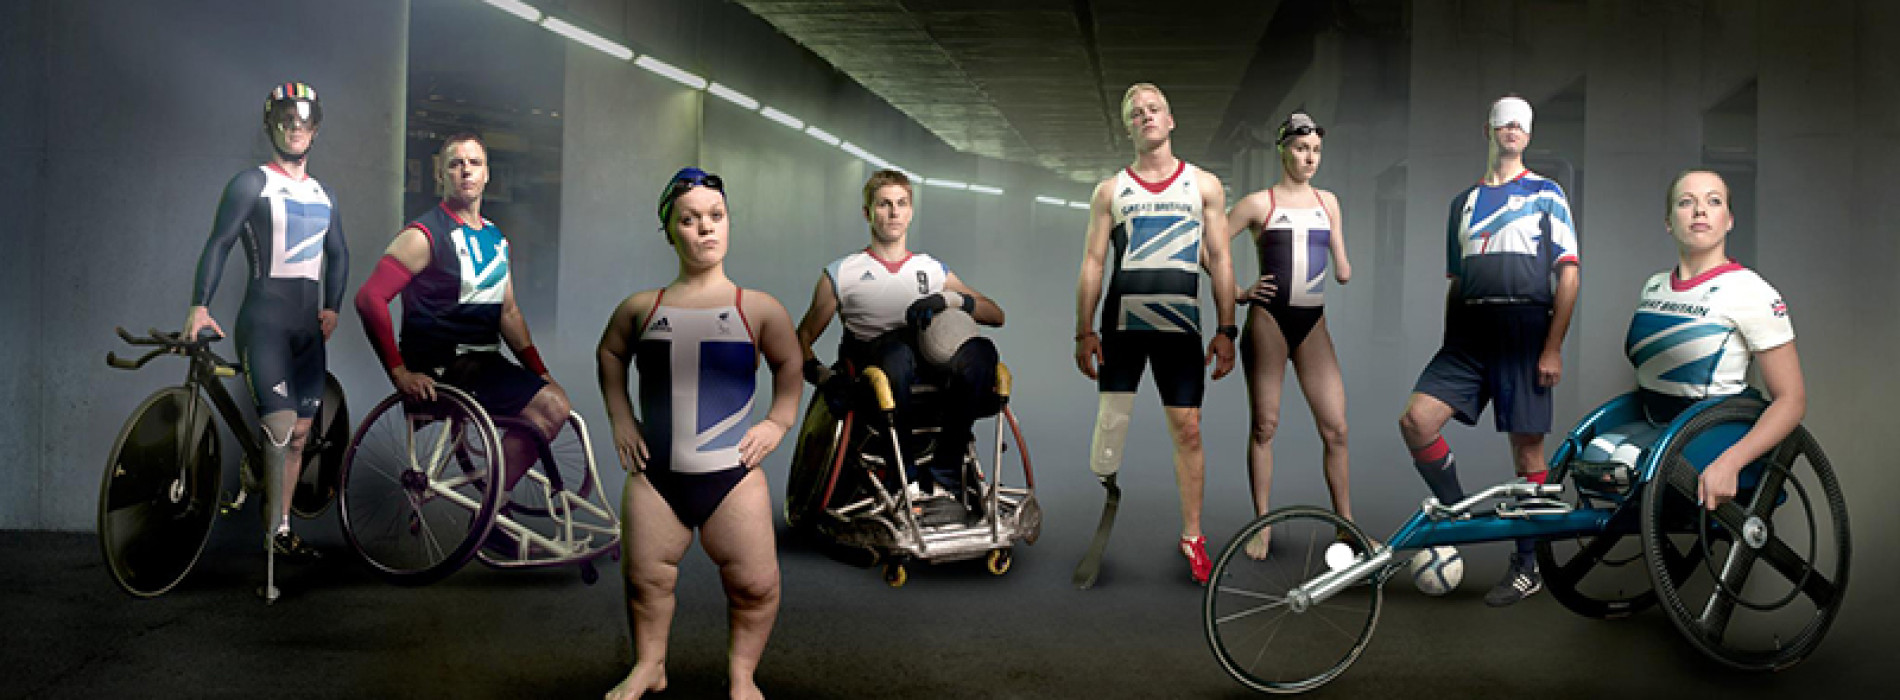 London 2012 Paralympians